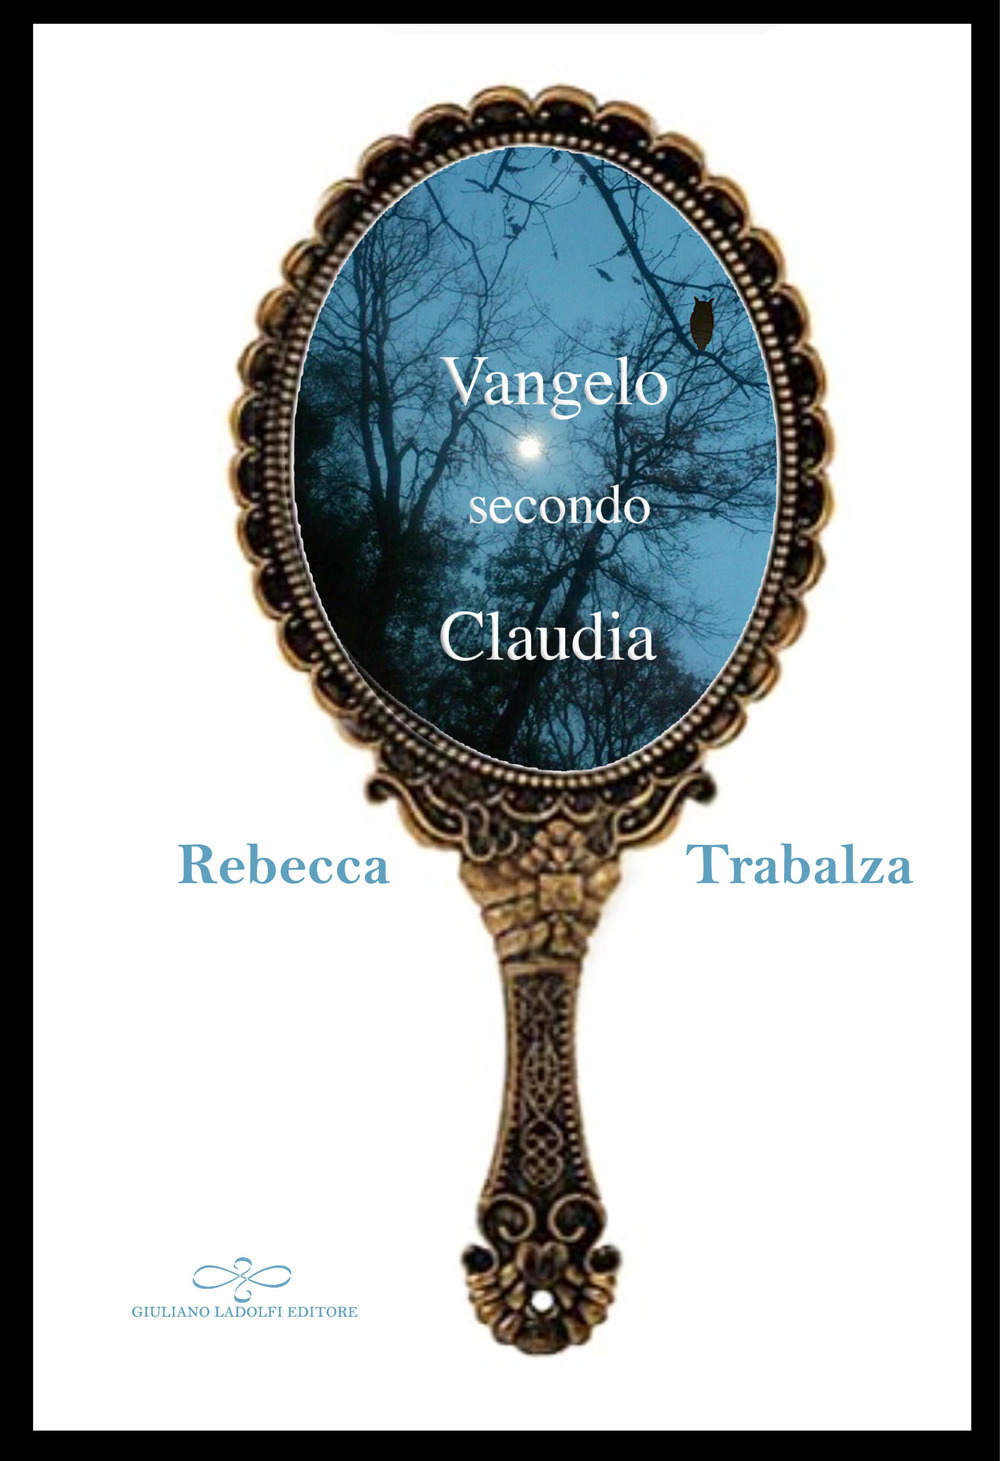 Image of Vangelo secondo Claudia